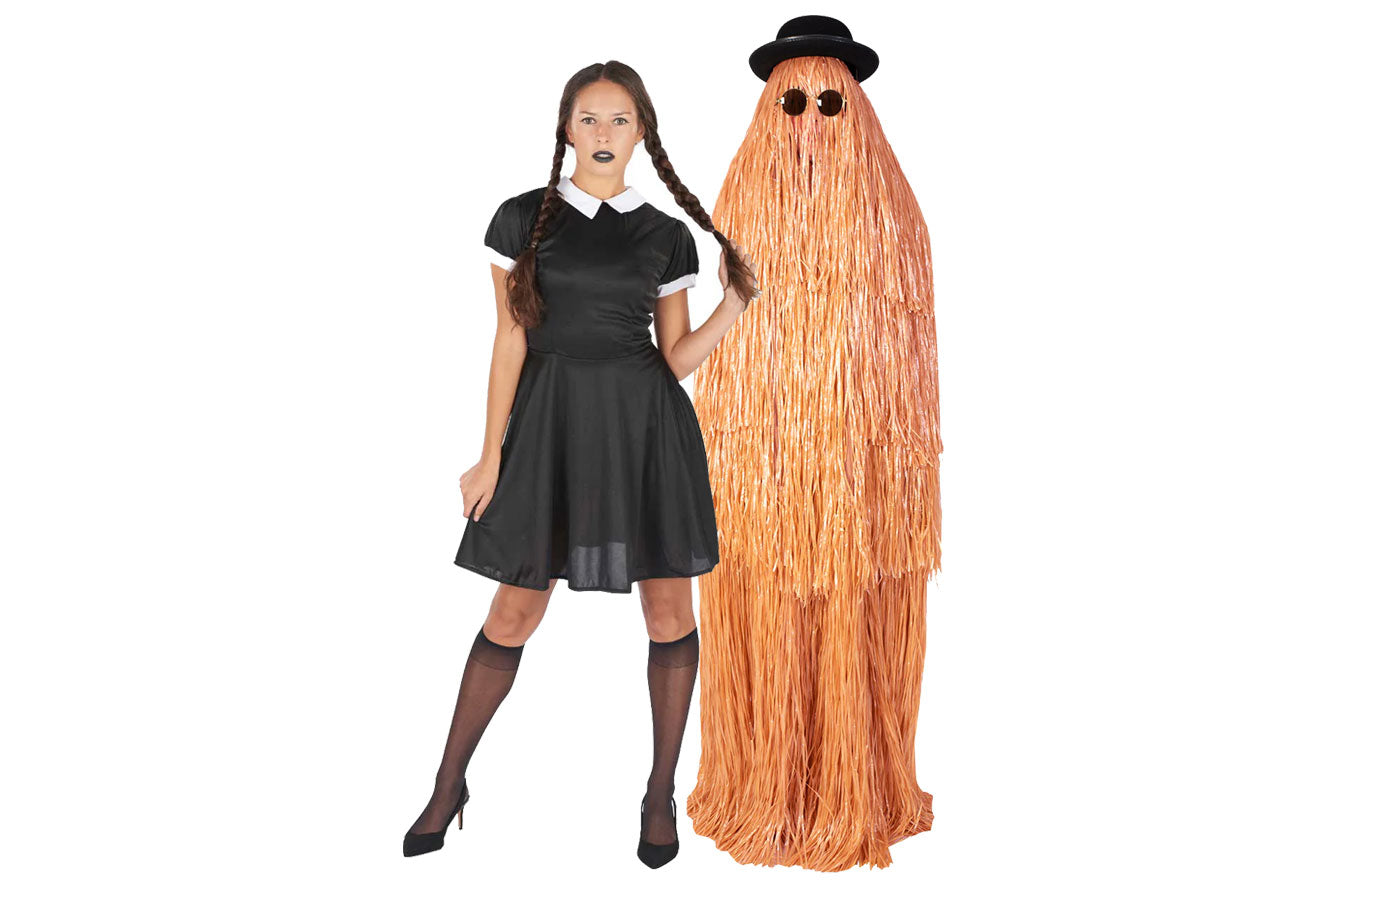 30 Creative Couples Halloween Costume Ideas pic